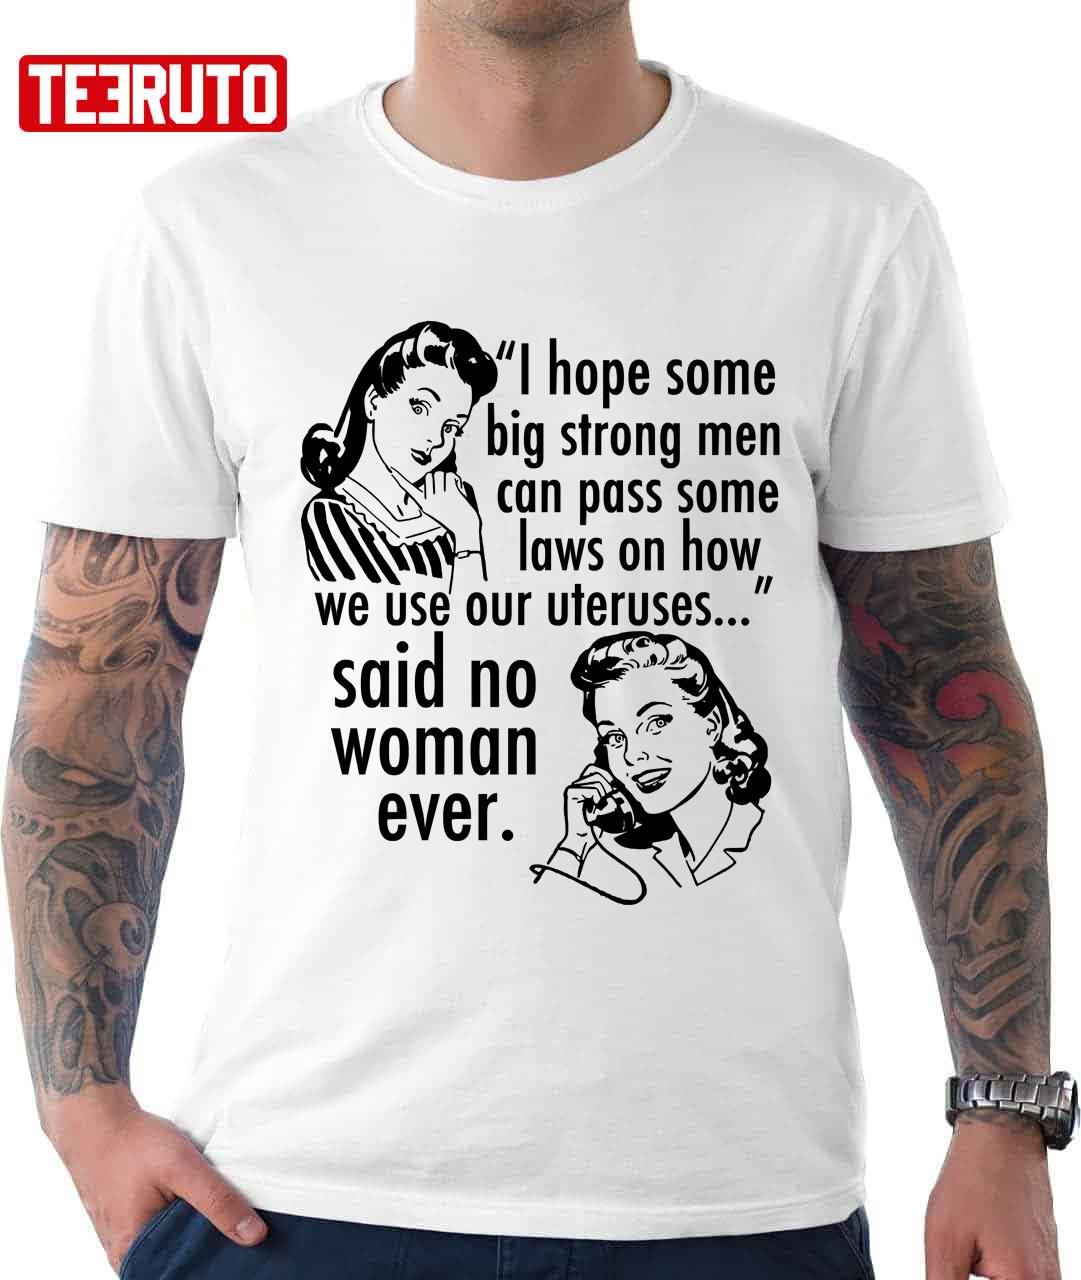 Pro Choice Vintage Humor Cartoon Quote Unisex T-Shirt